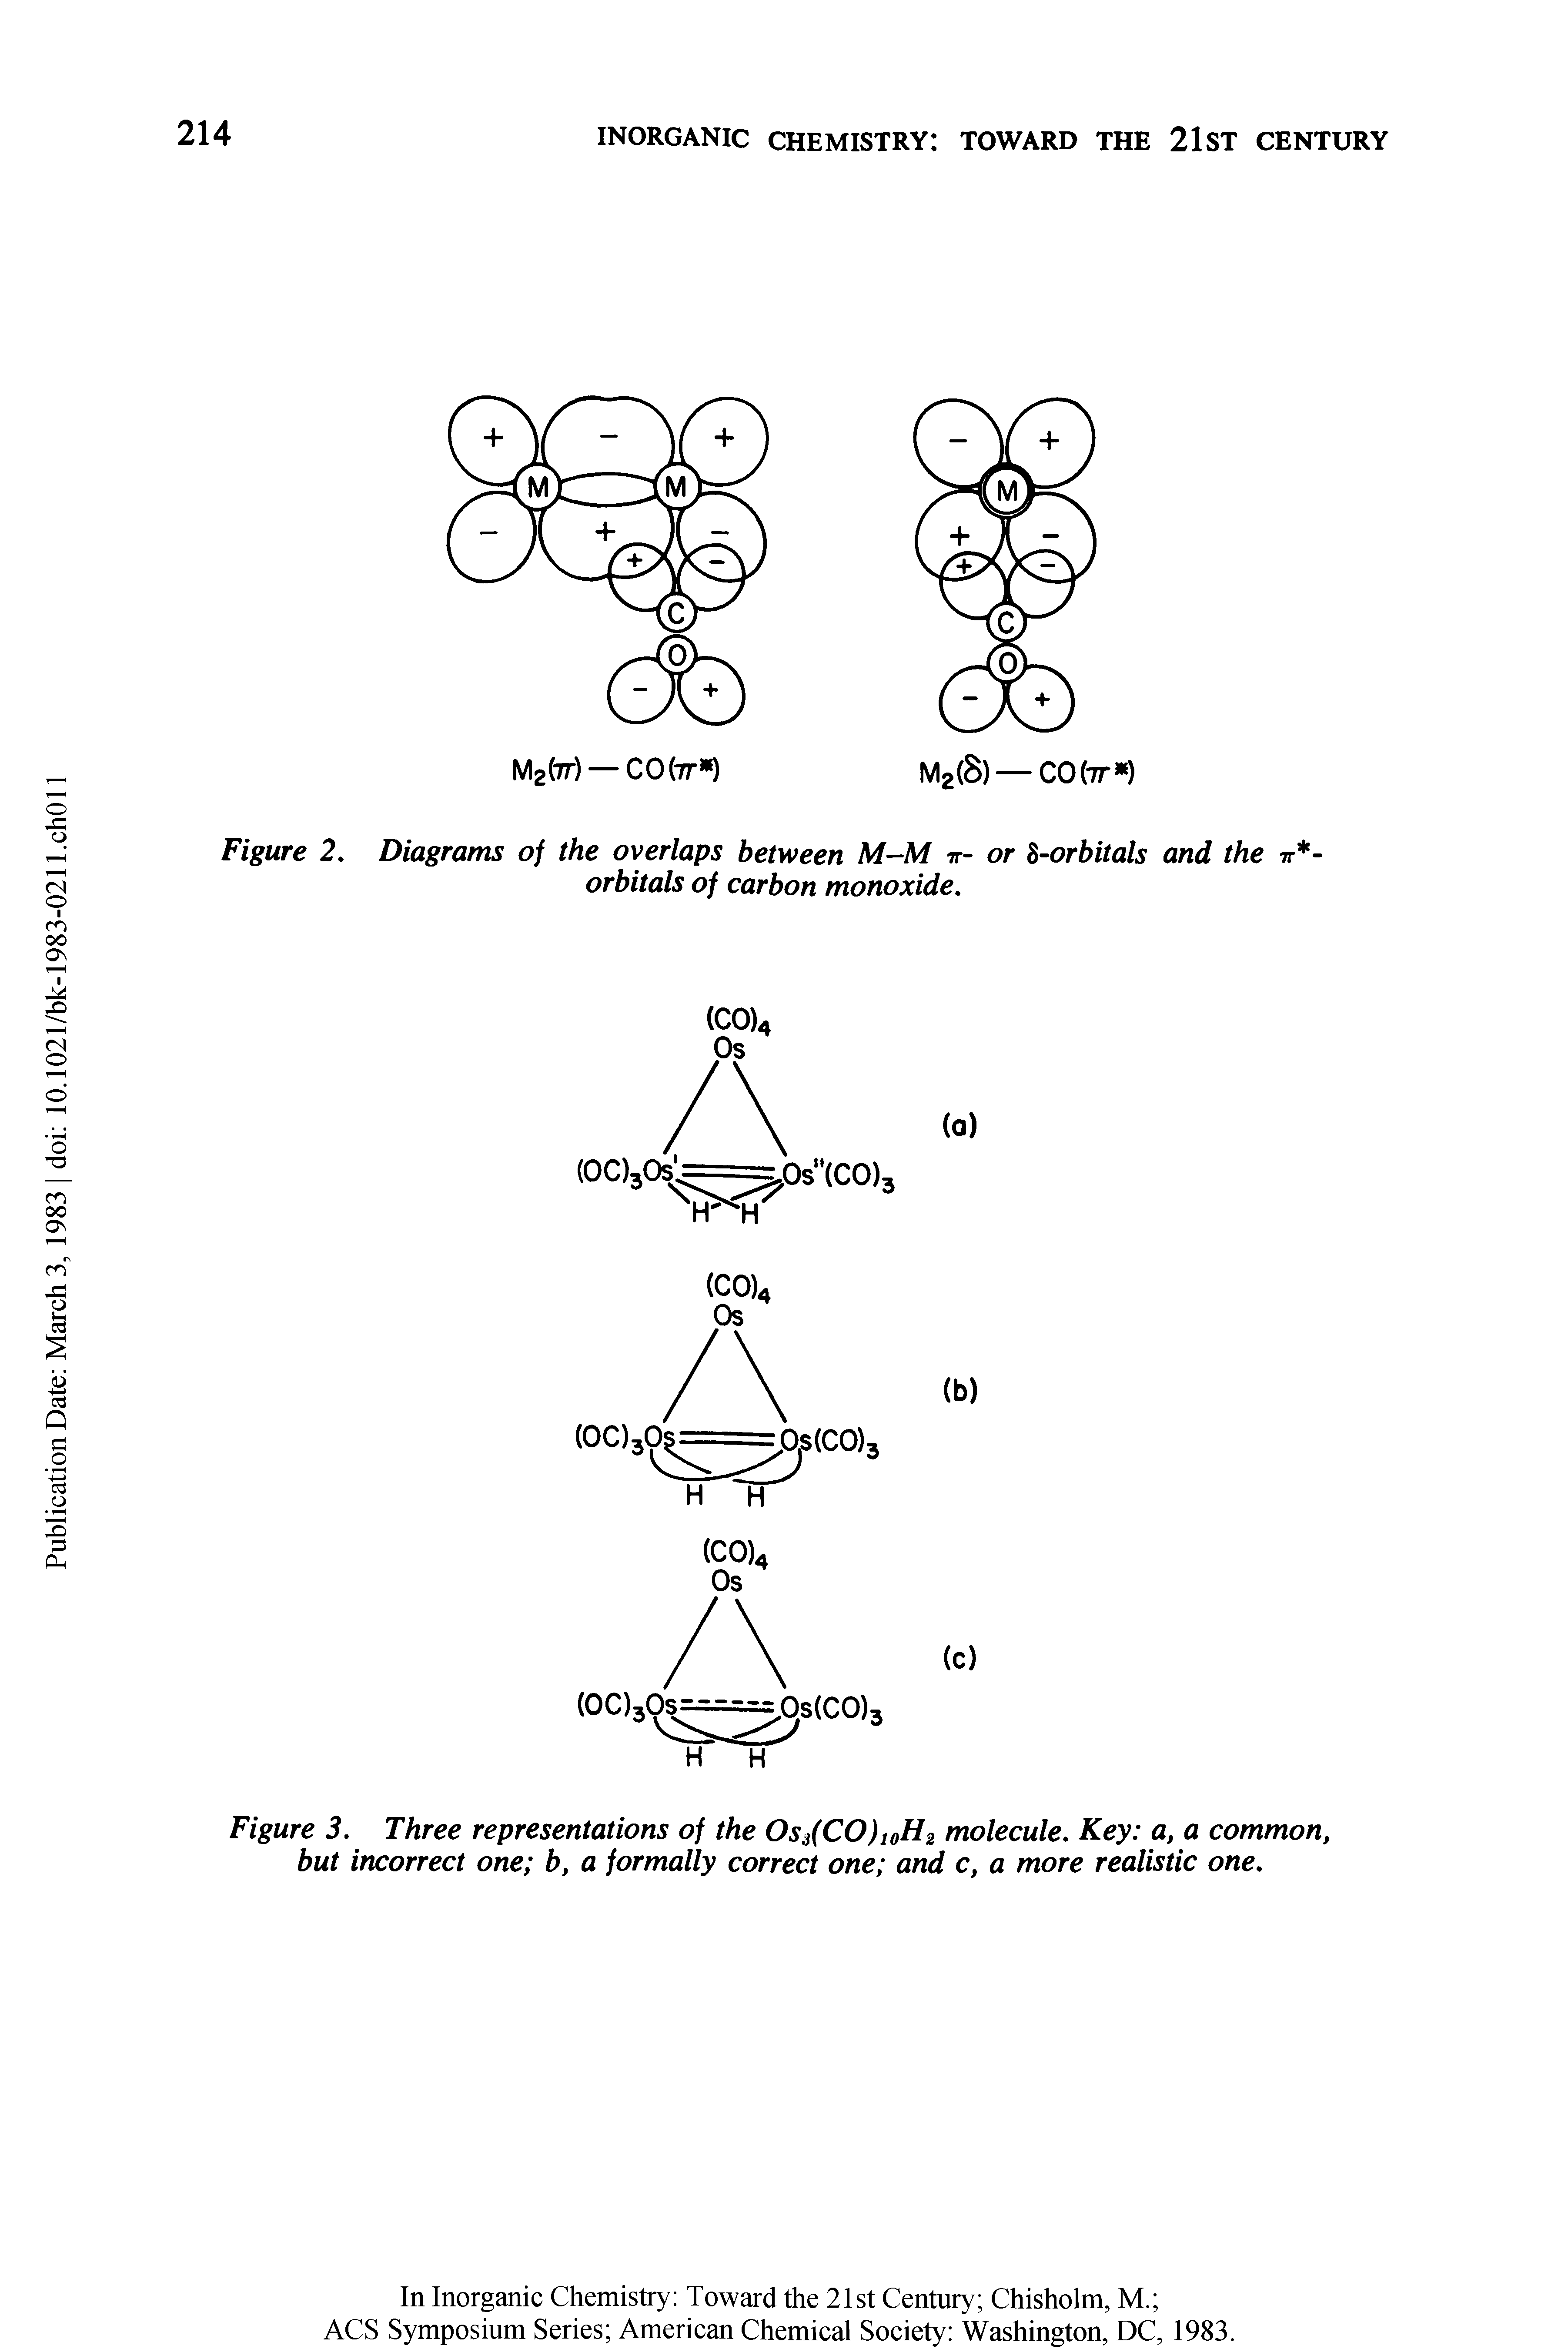 Figure 2. Diagrams of the overlaps between M-M tt- or h-orbitals and the r -orbitals of carbon monoxide.